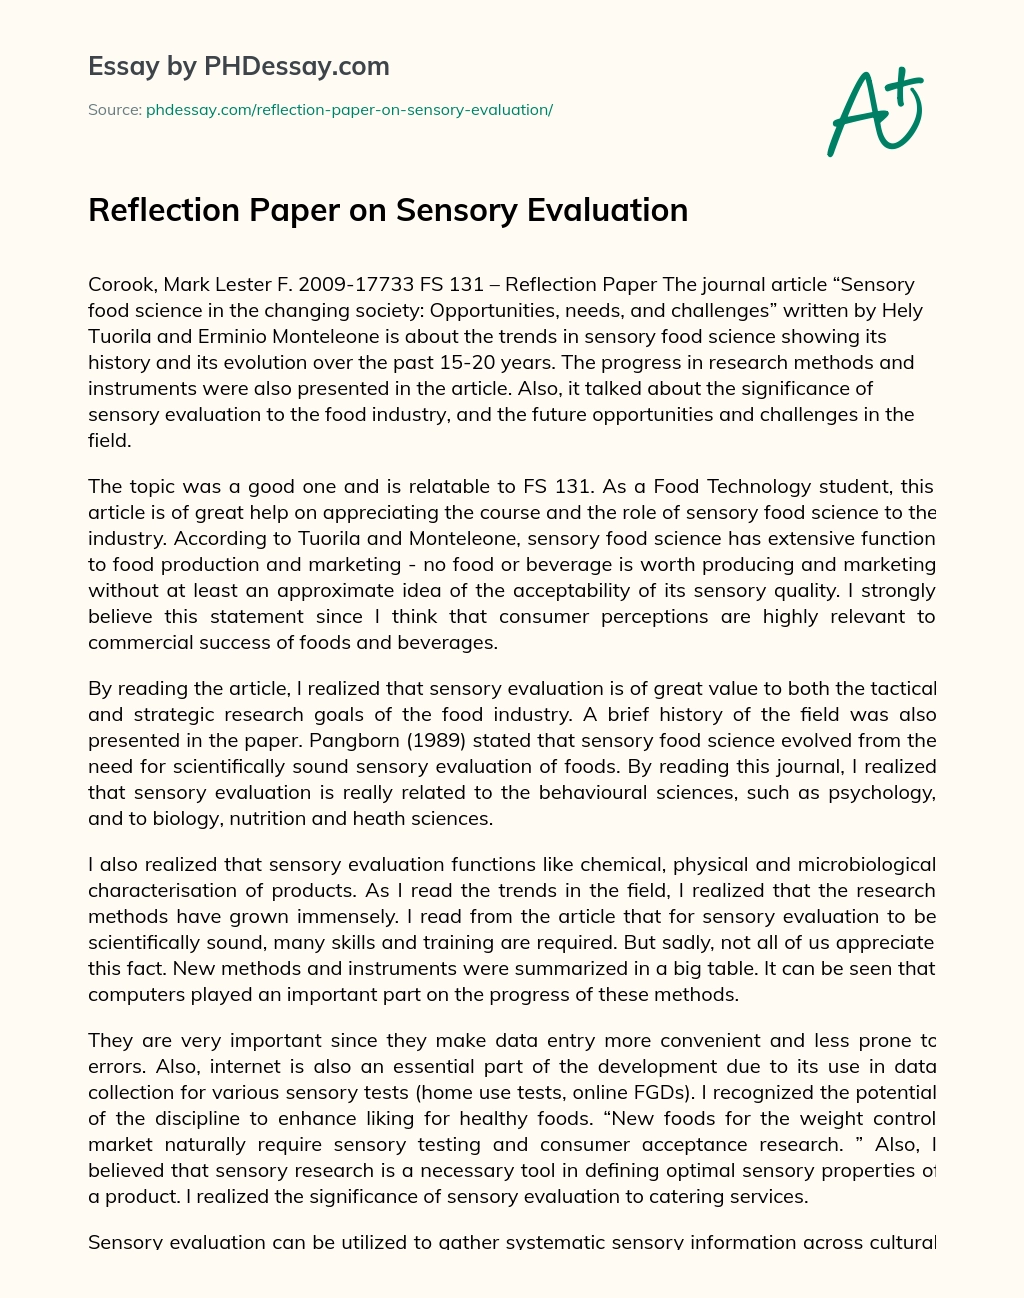 Reflection Paper on Sensory Evaluation essay